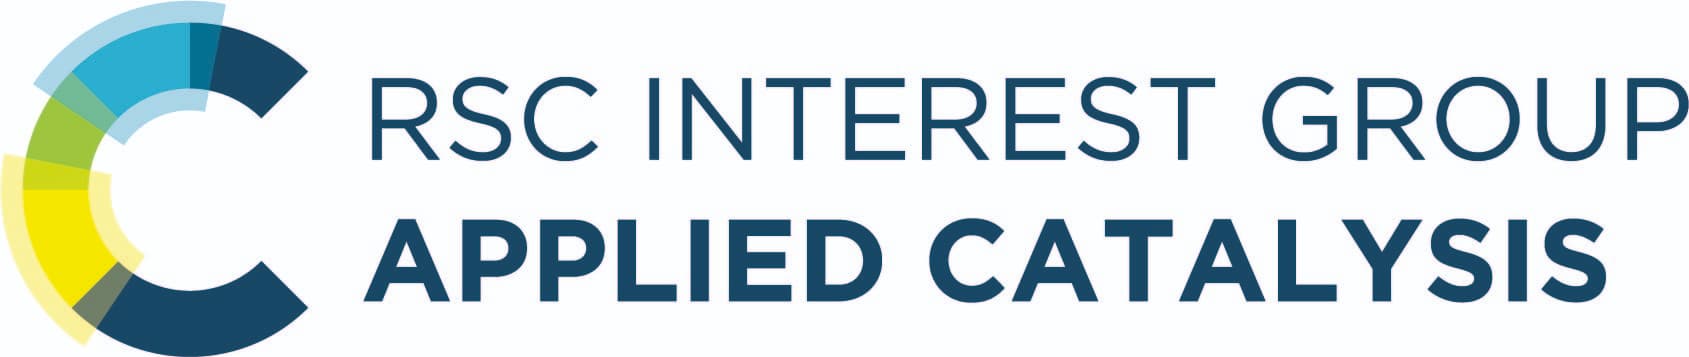 RSC Interest Group Applied Catalysis Logo